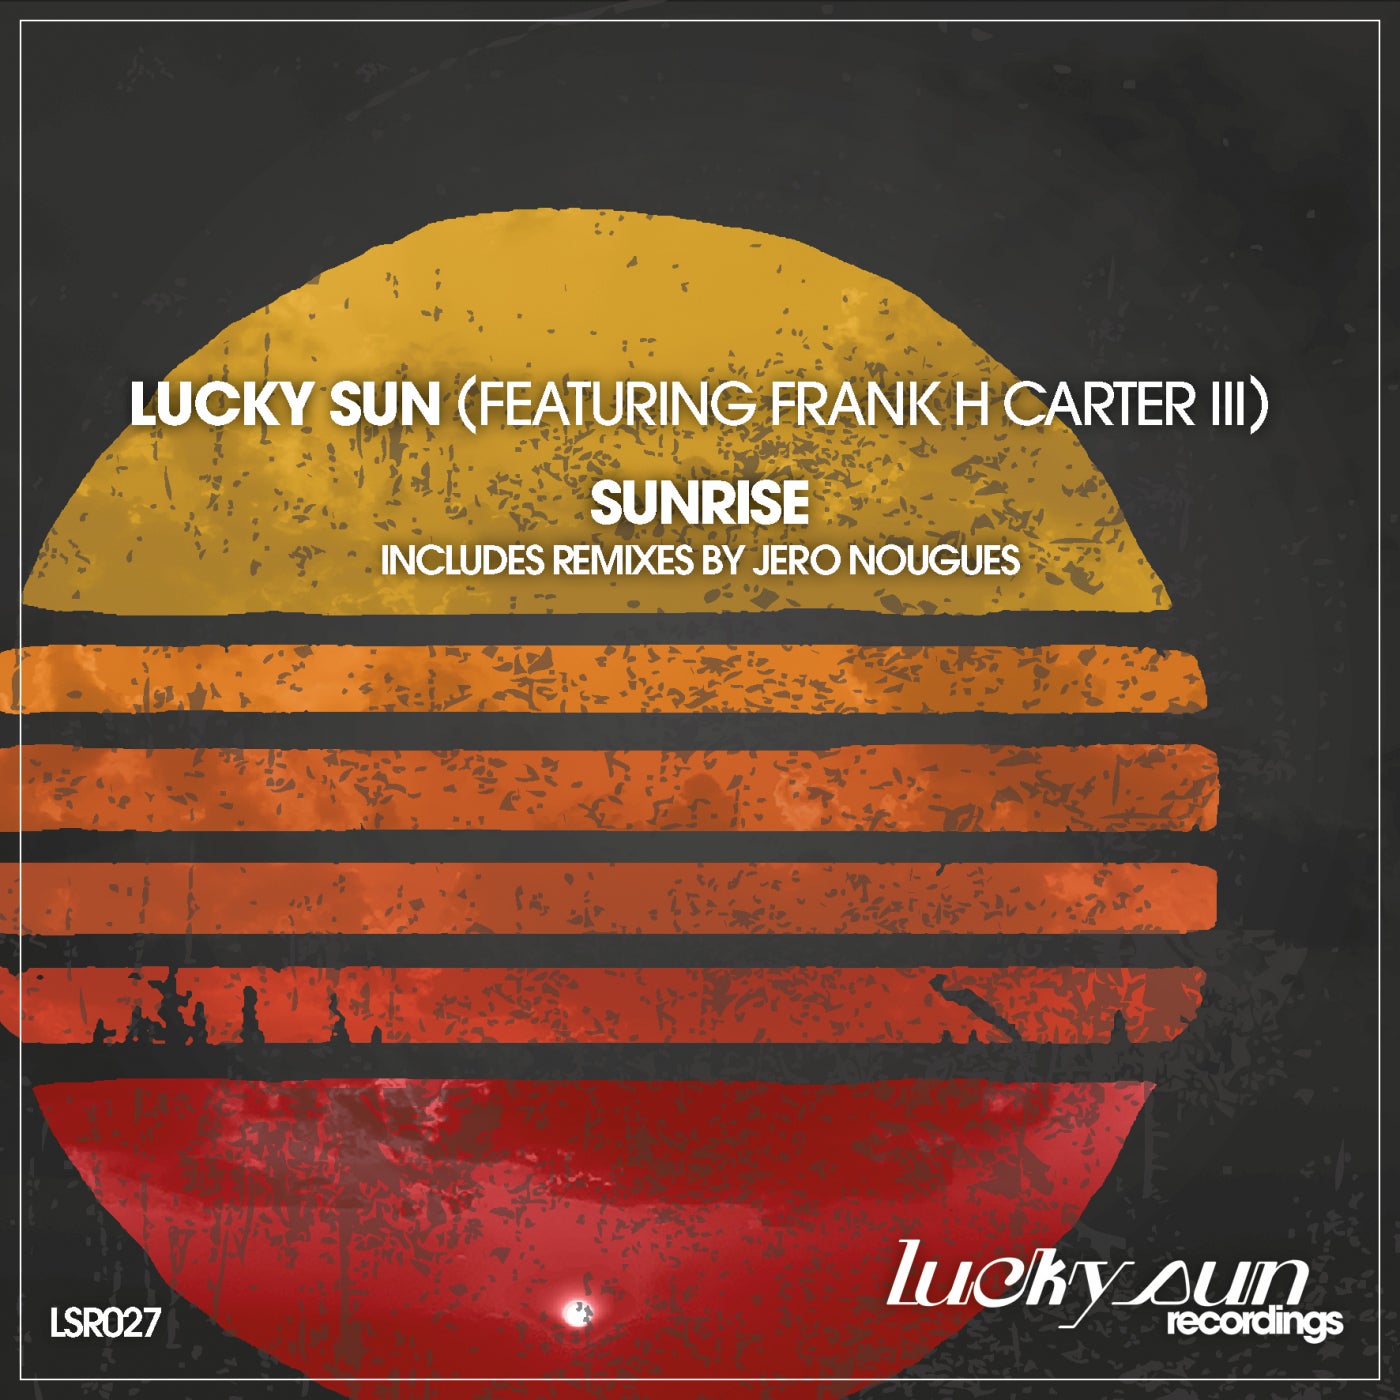 Frank h Carter III. Sun feat.. Luck Sun. Franka III. Солнце feat